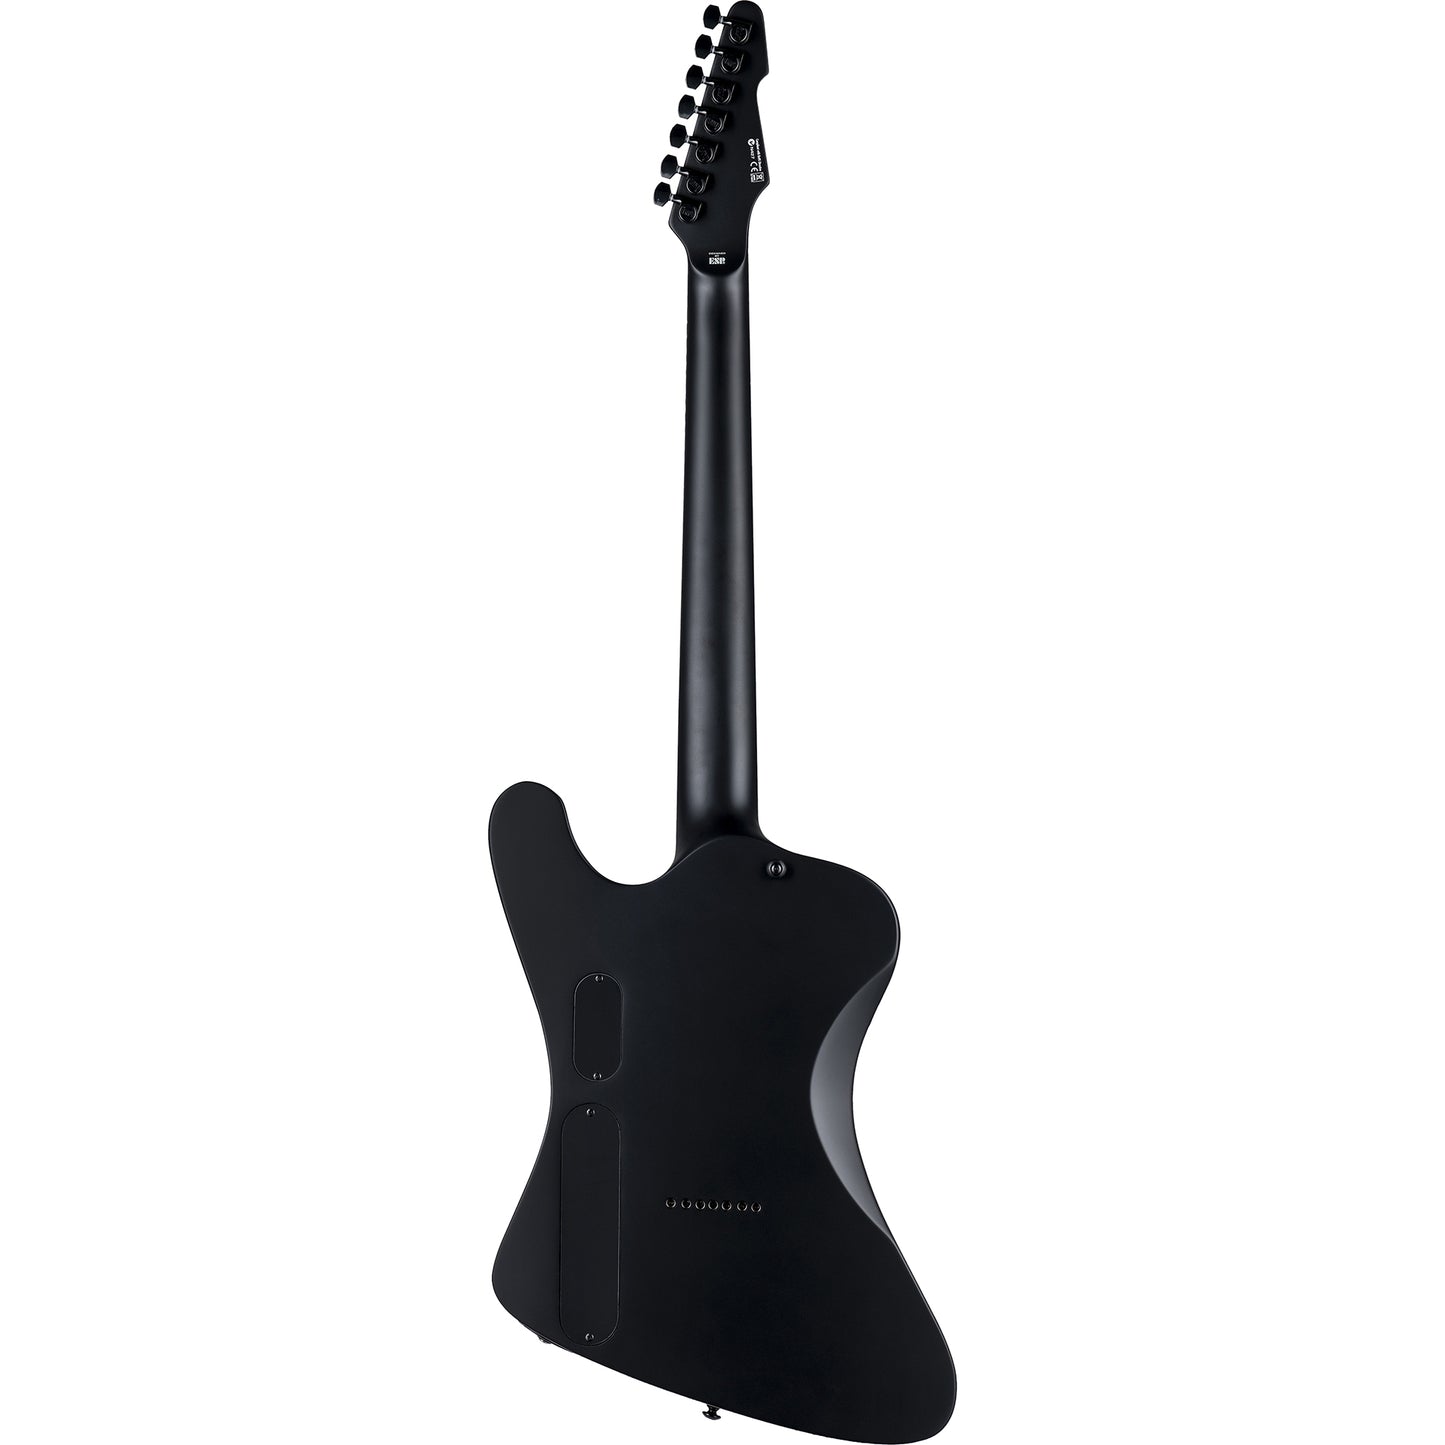 ESP LTD Phoenix-7 Baritone Black Metal Electric Guitar, Black Satin